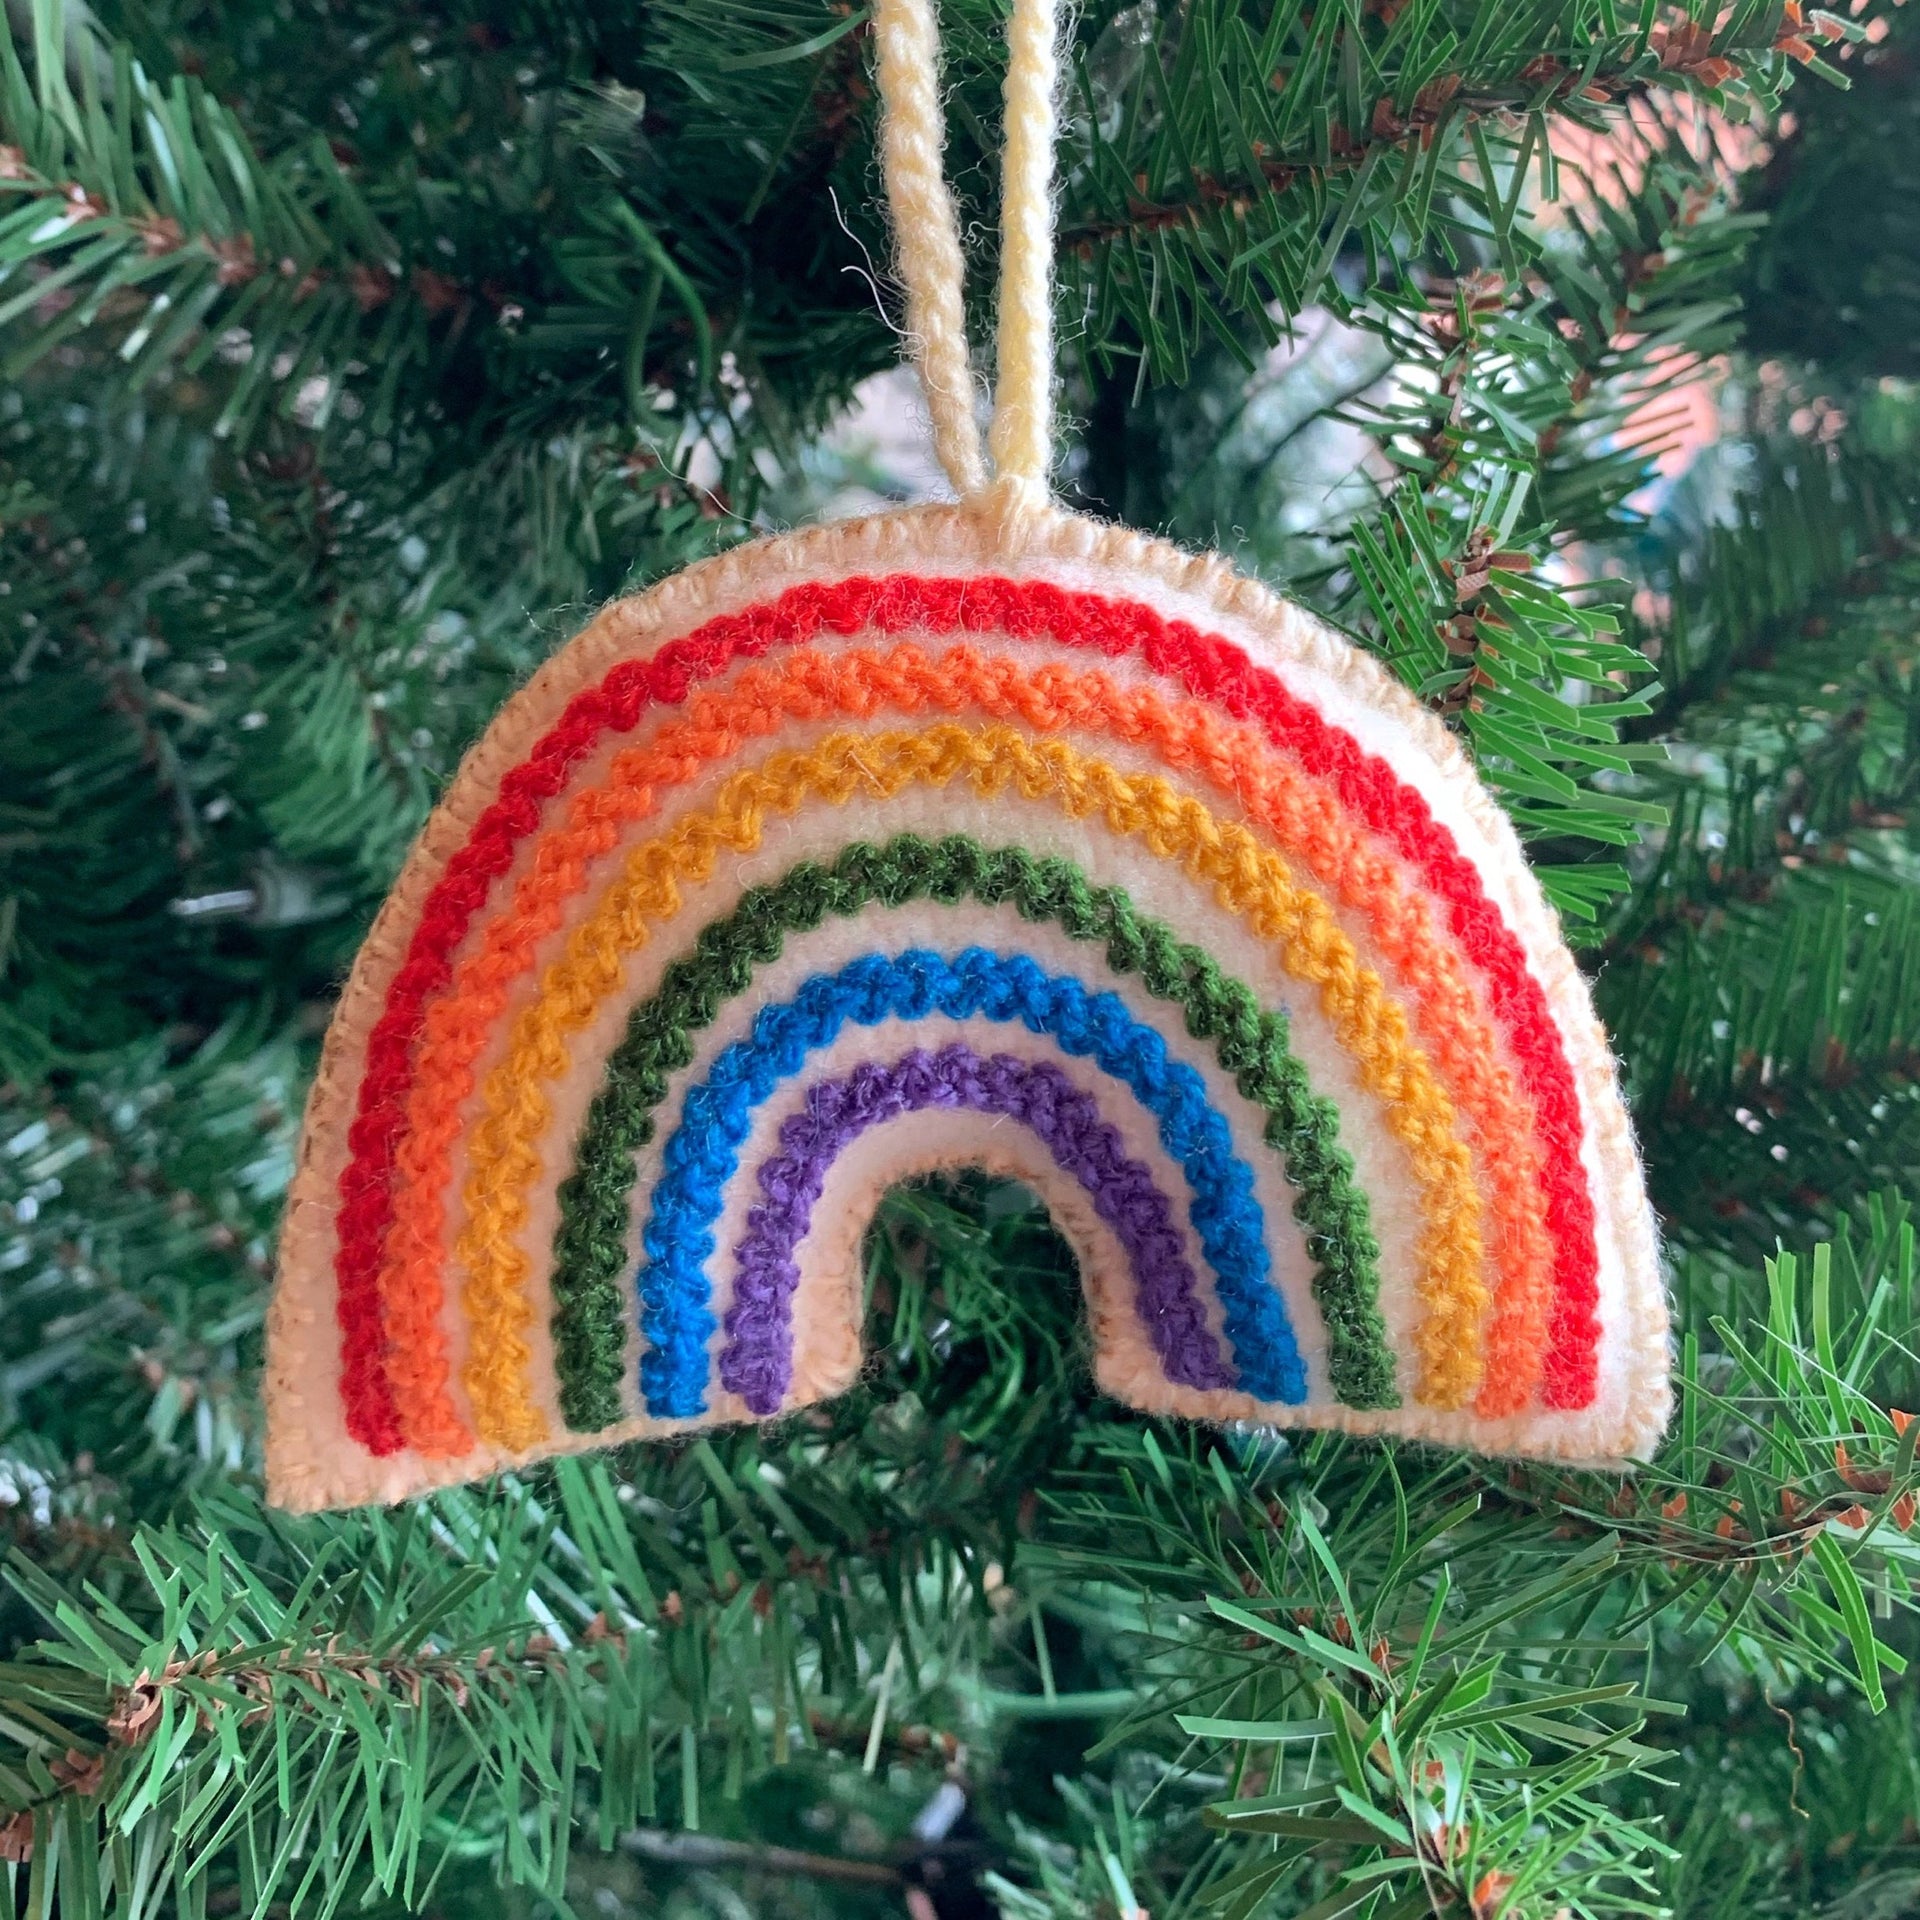 Handmade rainbow ornament hanging on Christmas tree.